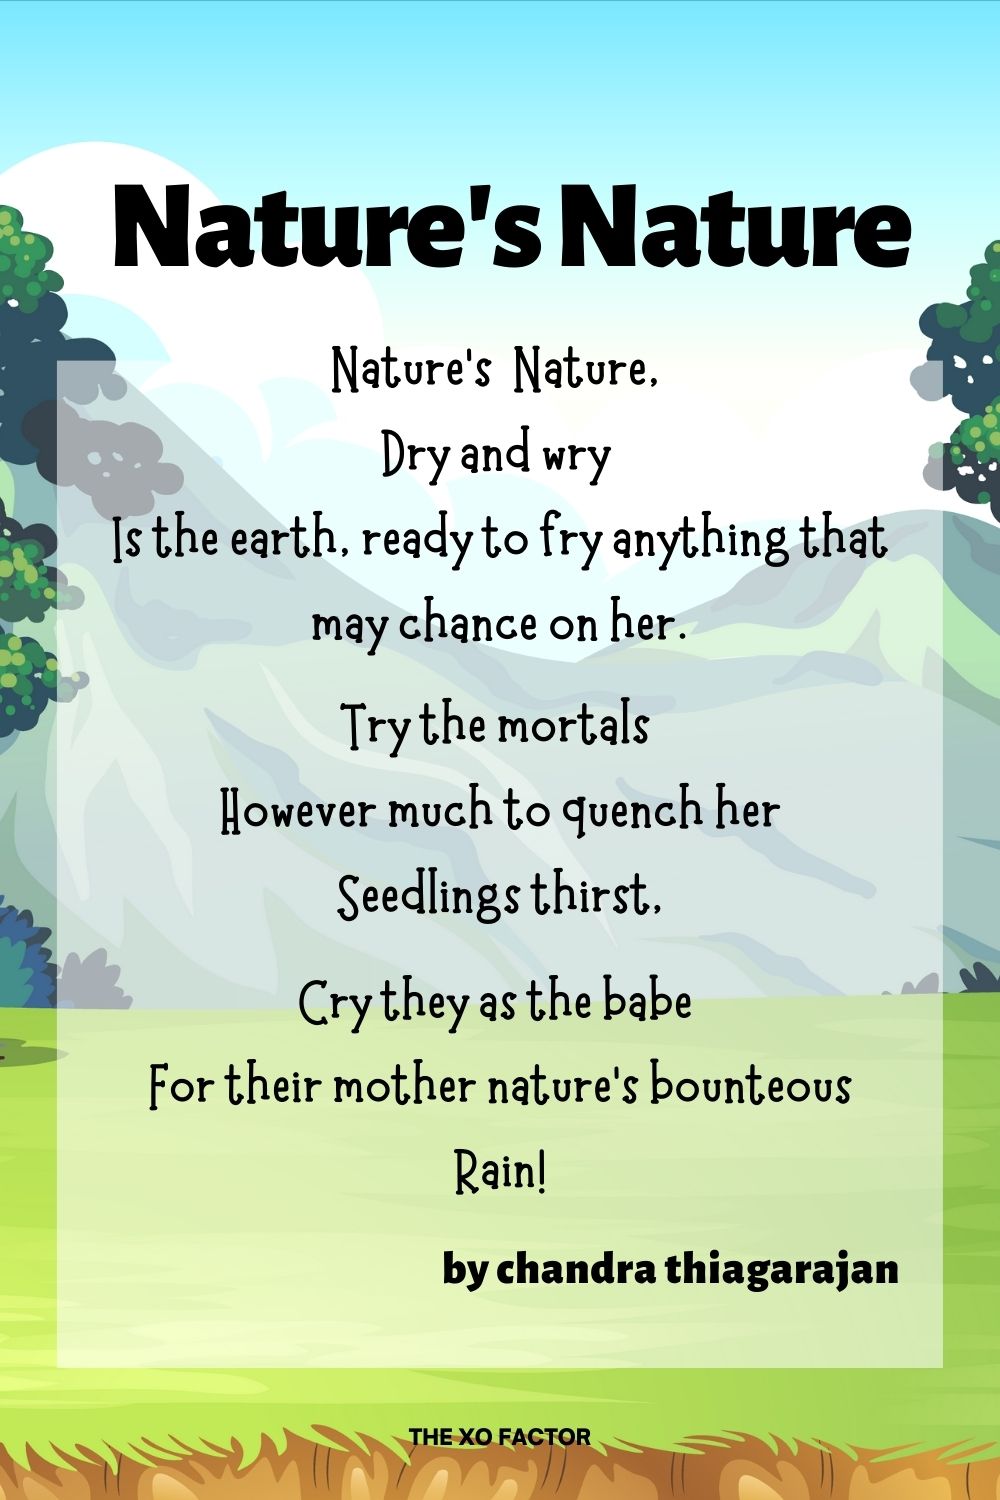 Nature's Nature Poem by chandra thiagarajan